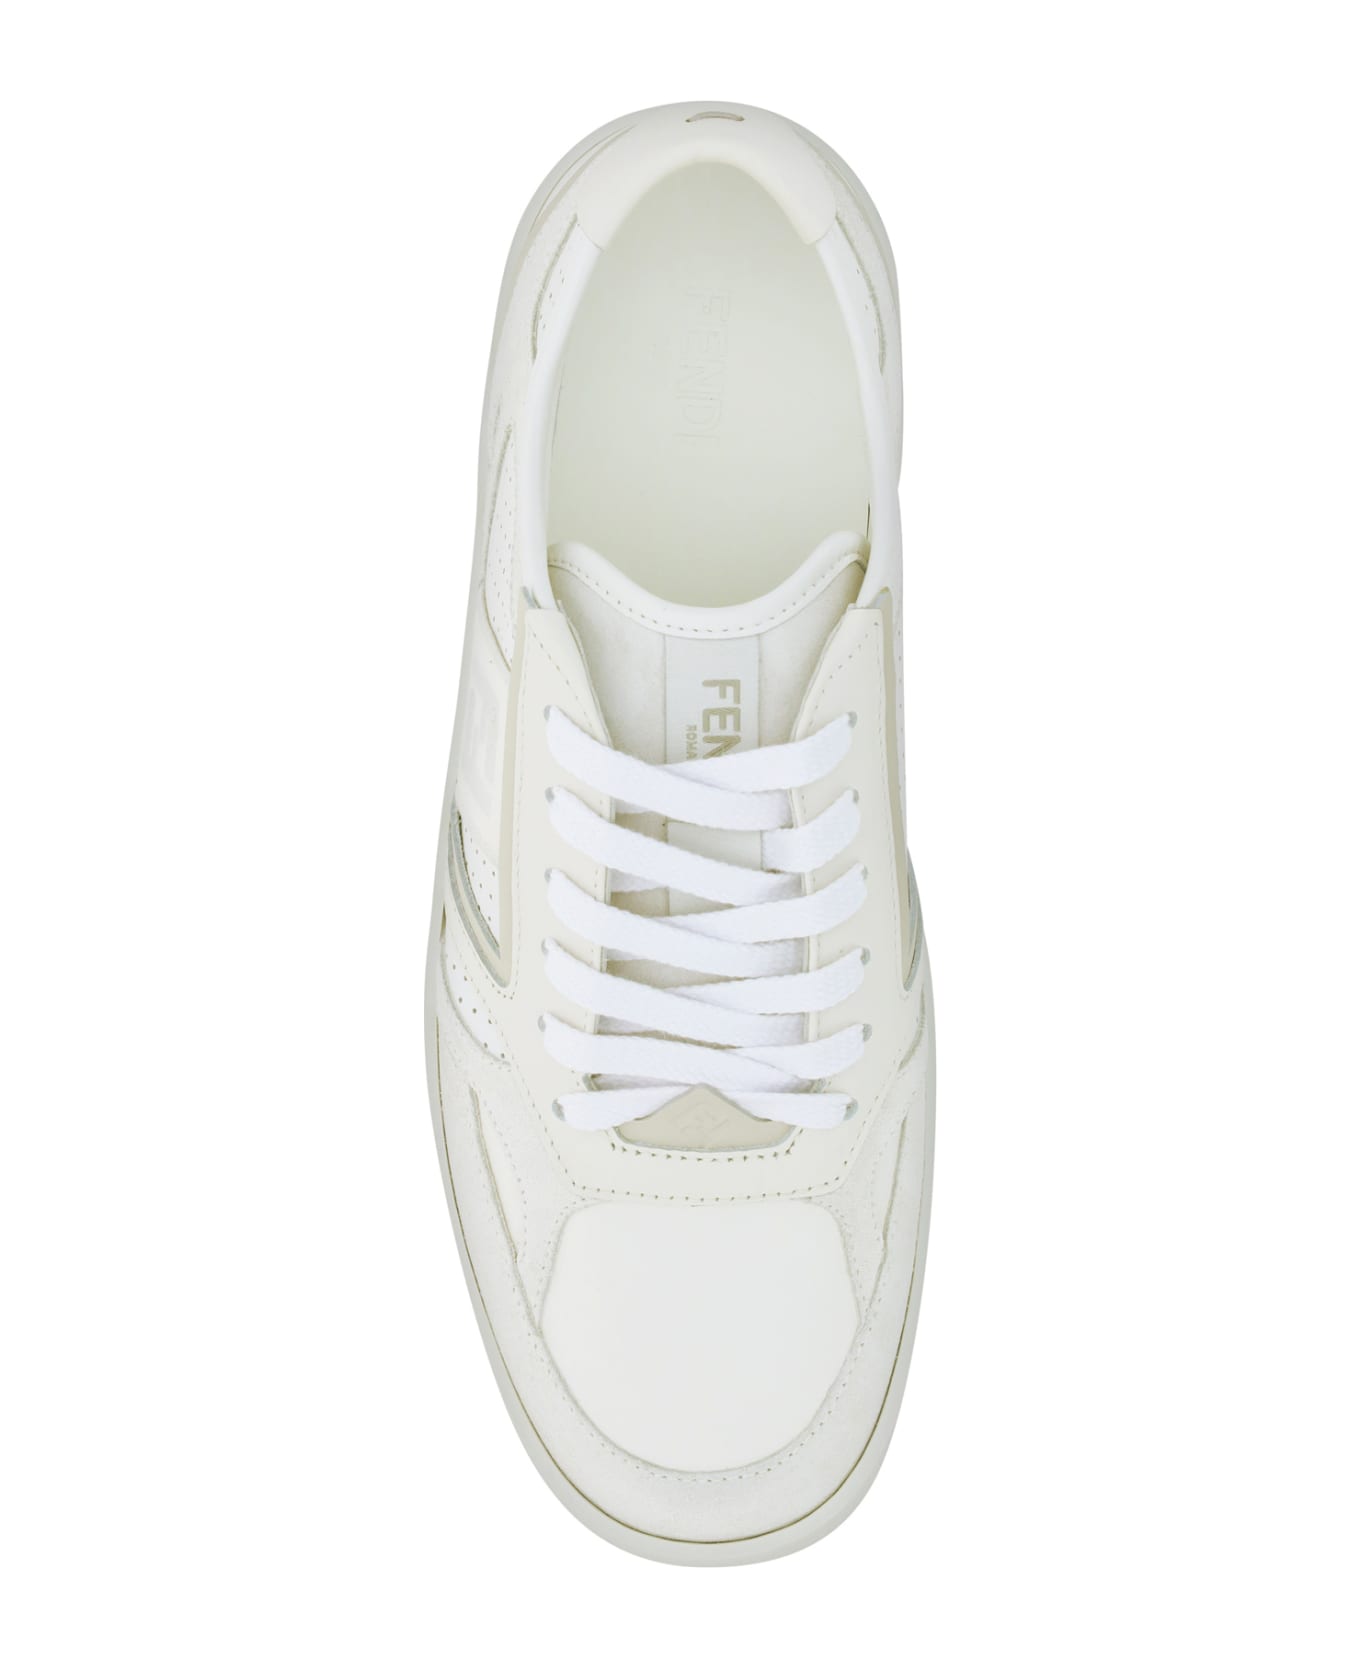 Fendi Low-top Sneakers - Bianco/ghiaccio